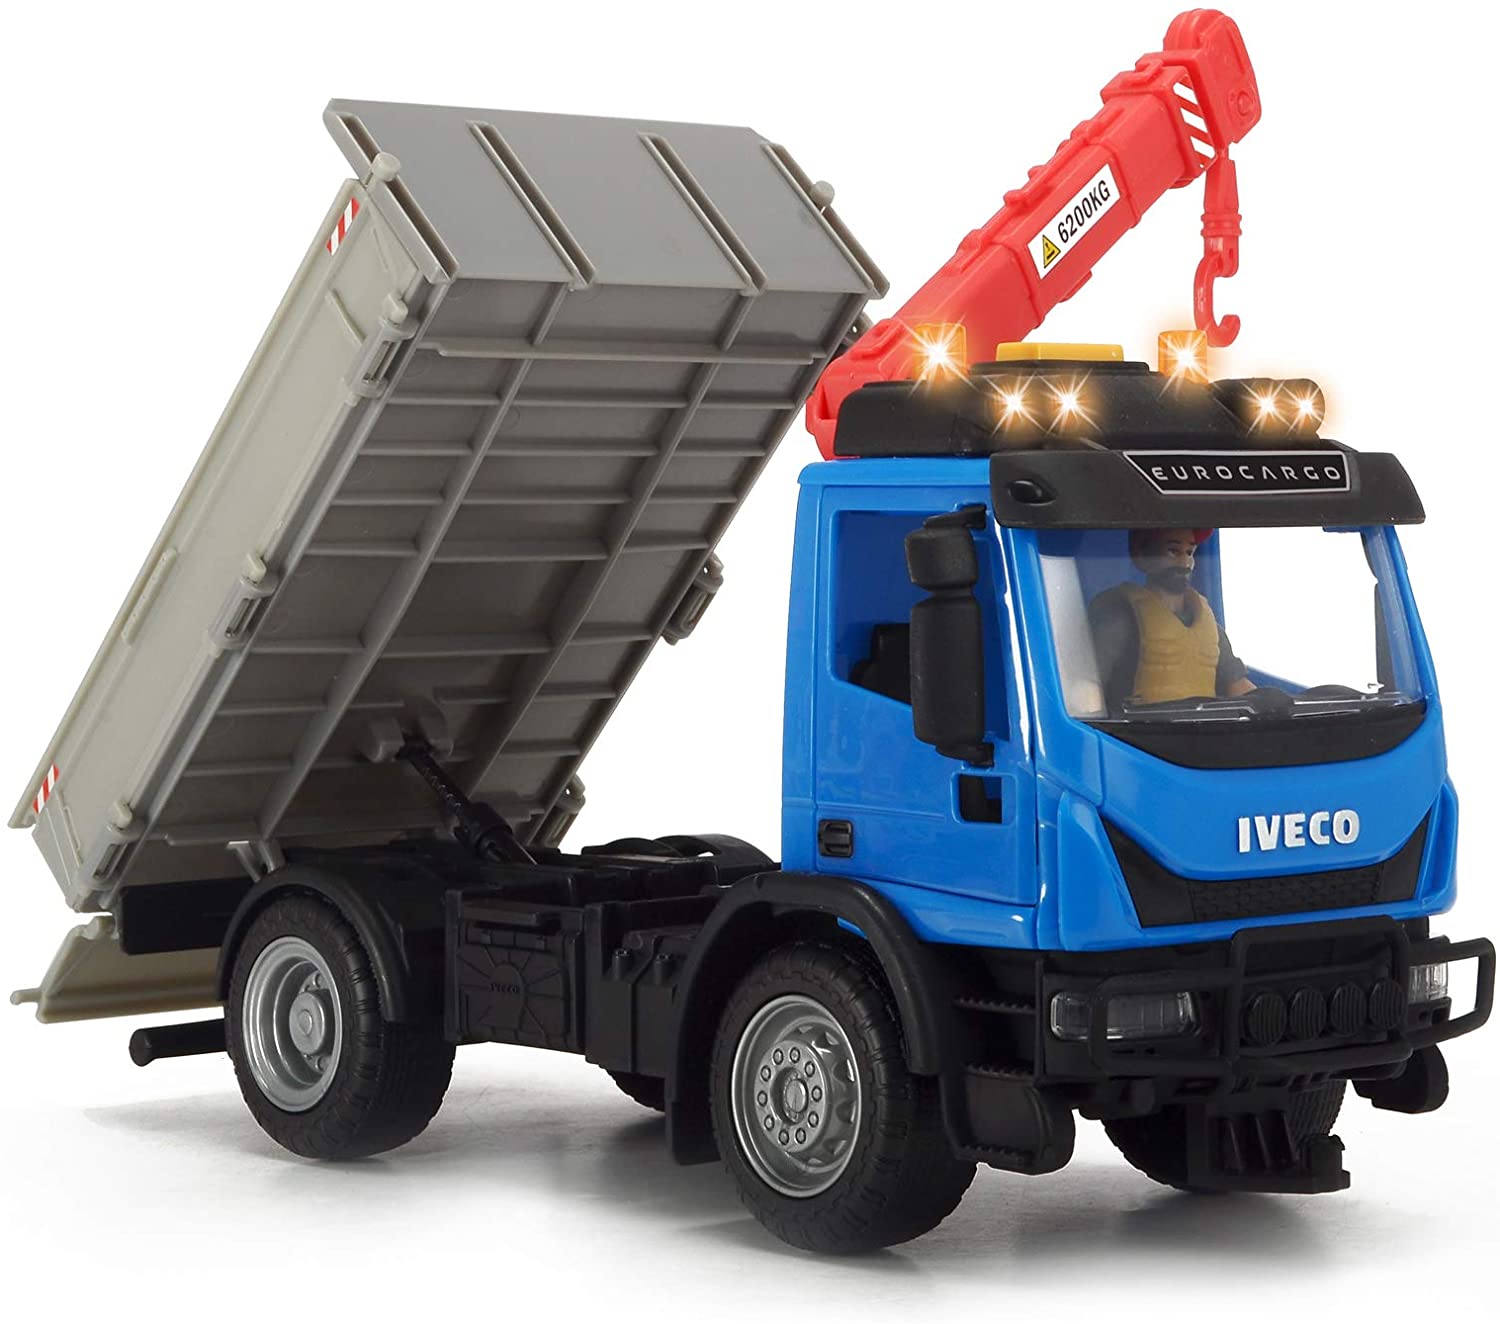 Set de joaca - Iveco Recycling Container Set | Dickie Toys - 1